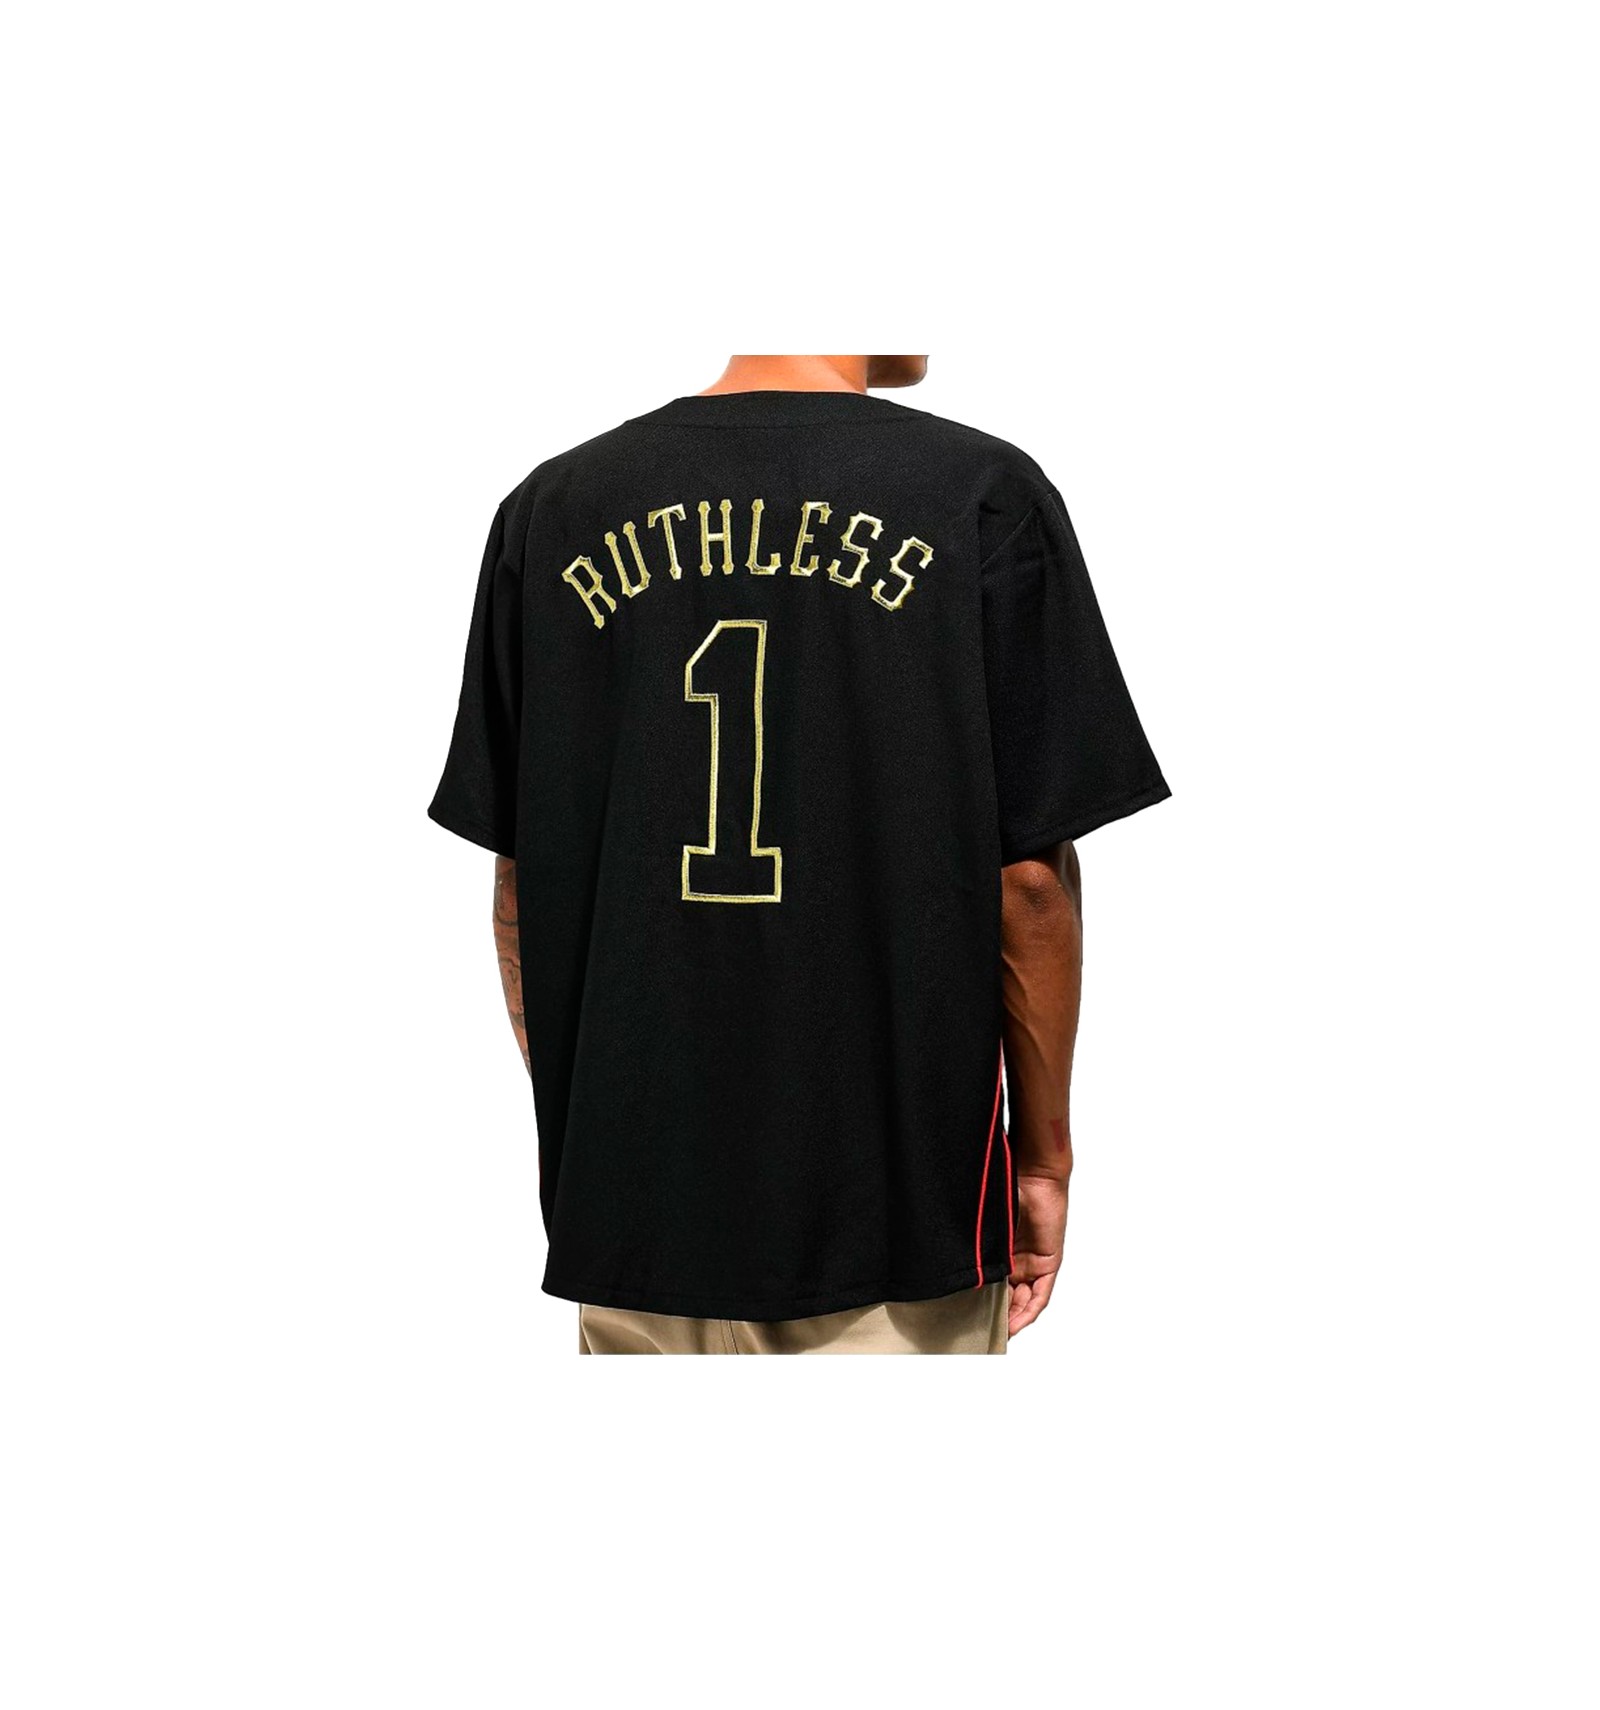 DGK Ruthless Black Baseball Jersey